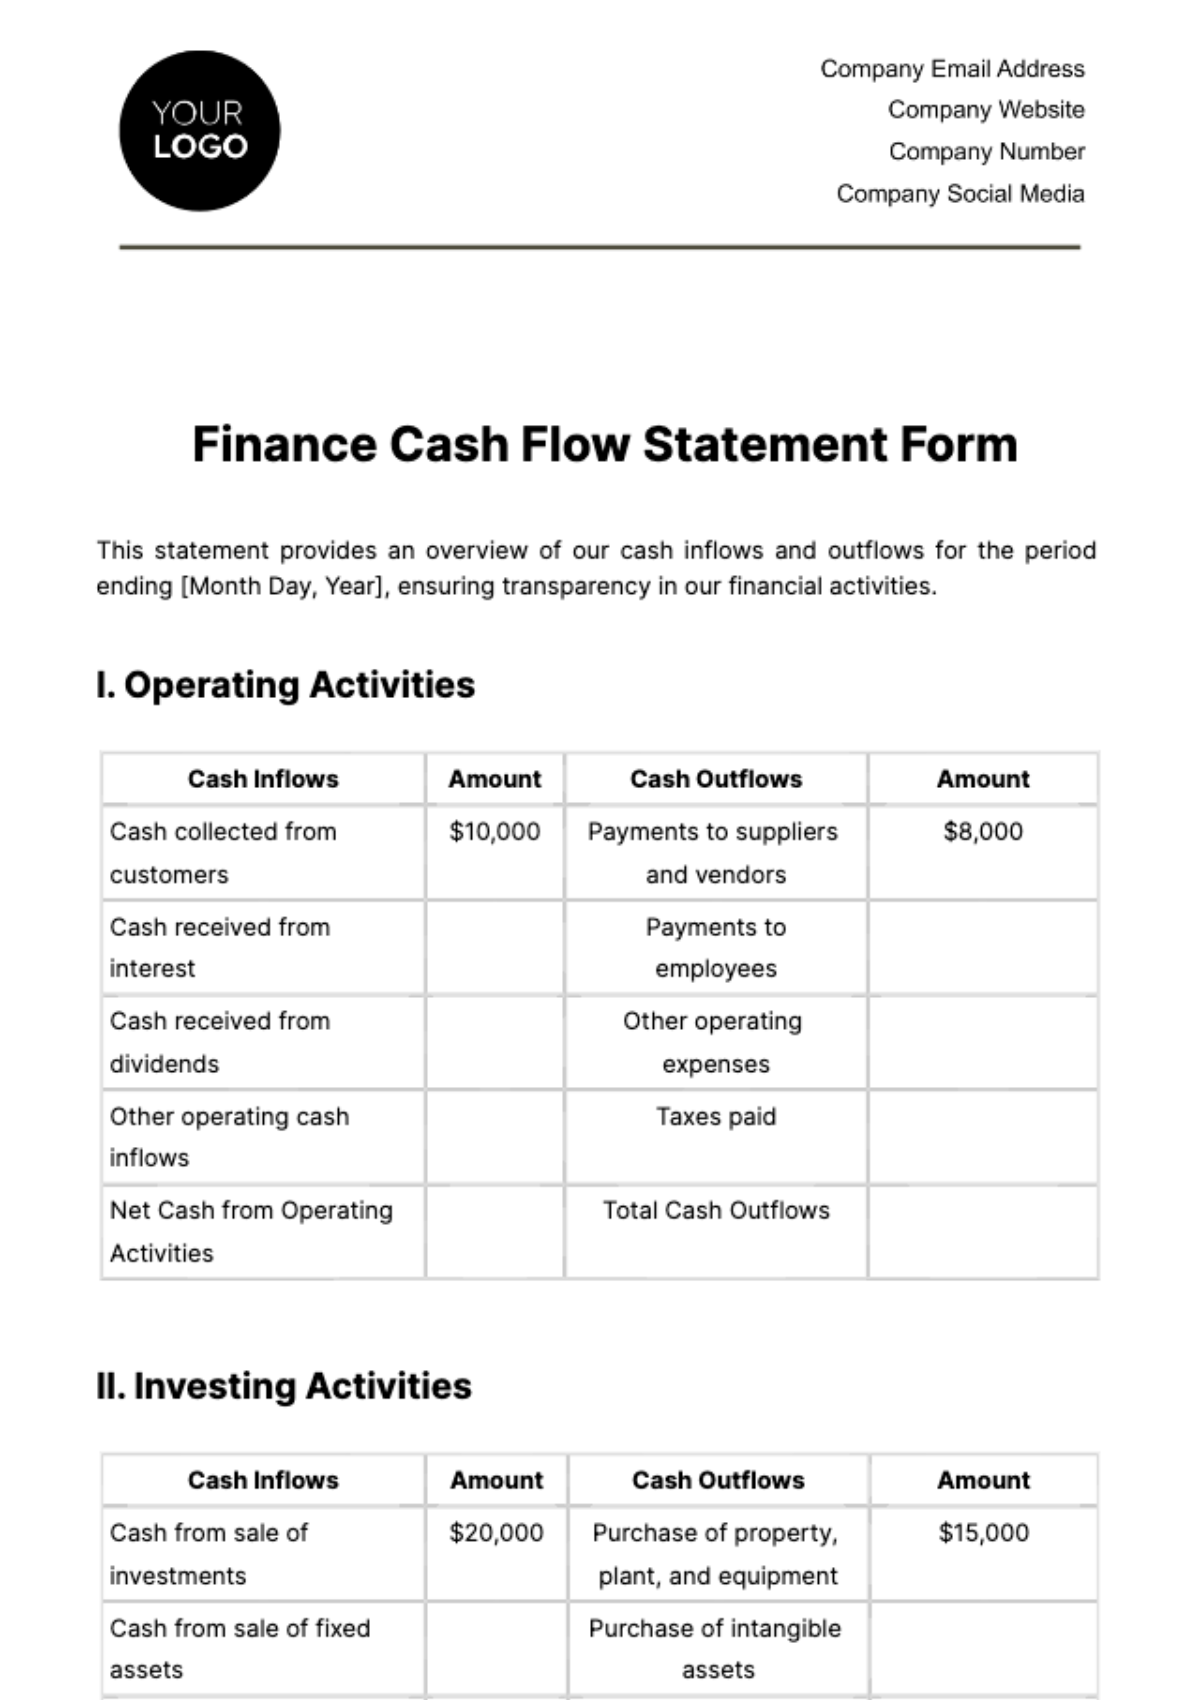 Finance Cash Flow Statement Form Template